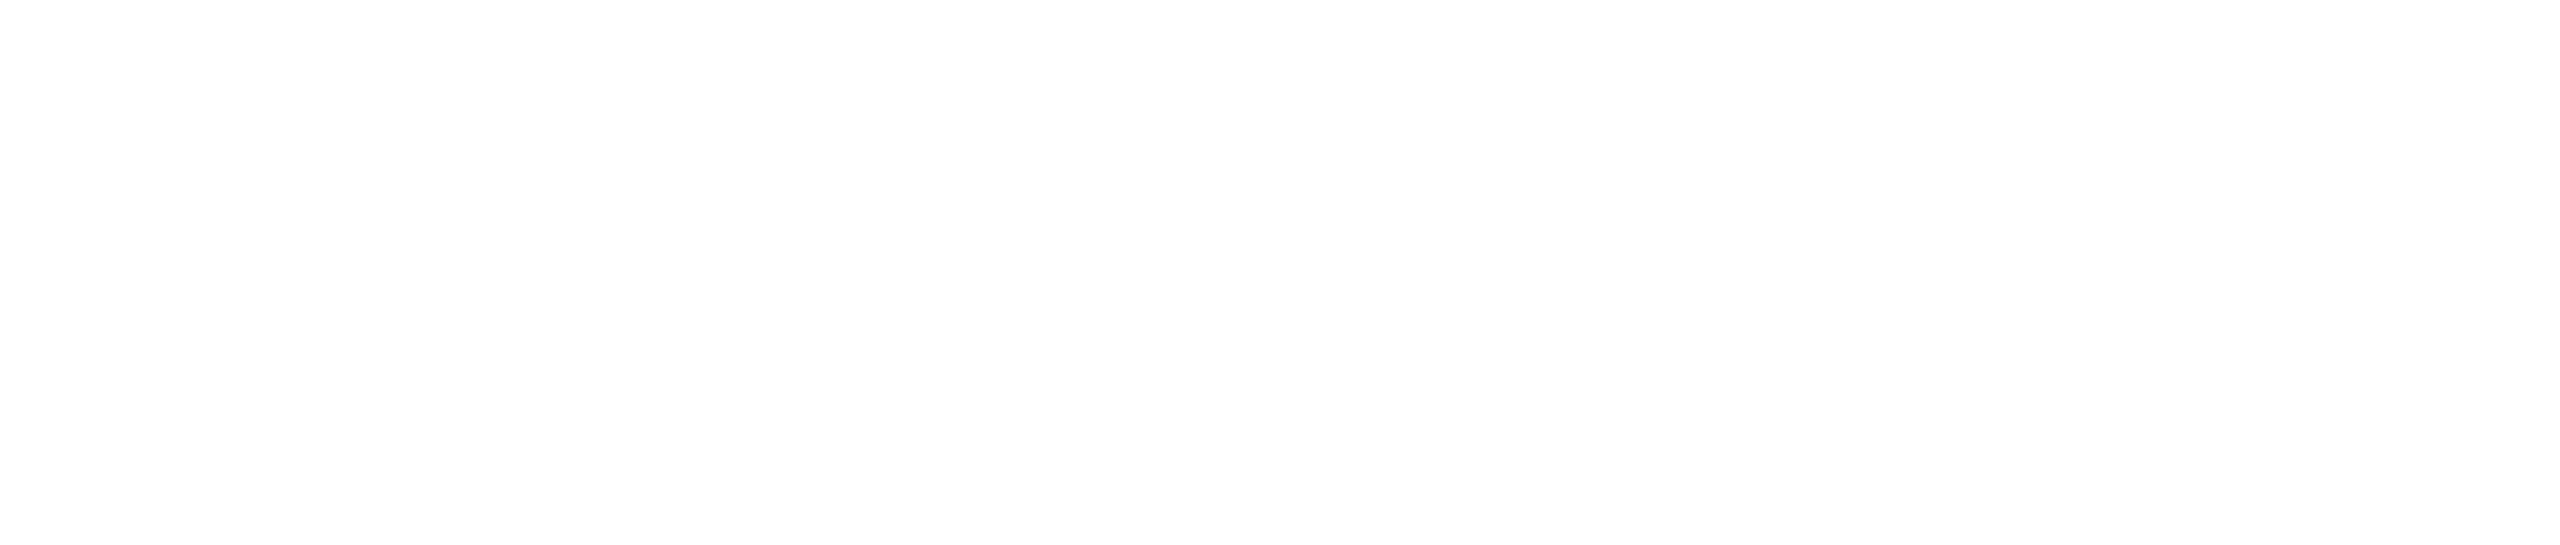 Microsoft_logo_(2012) - white-1